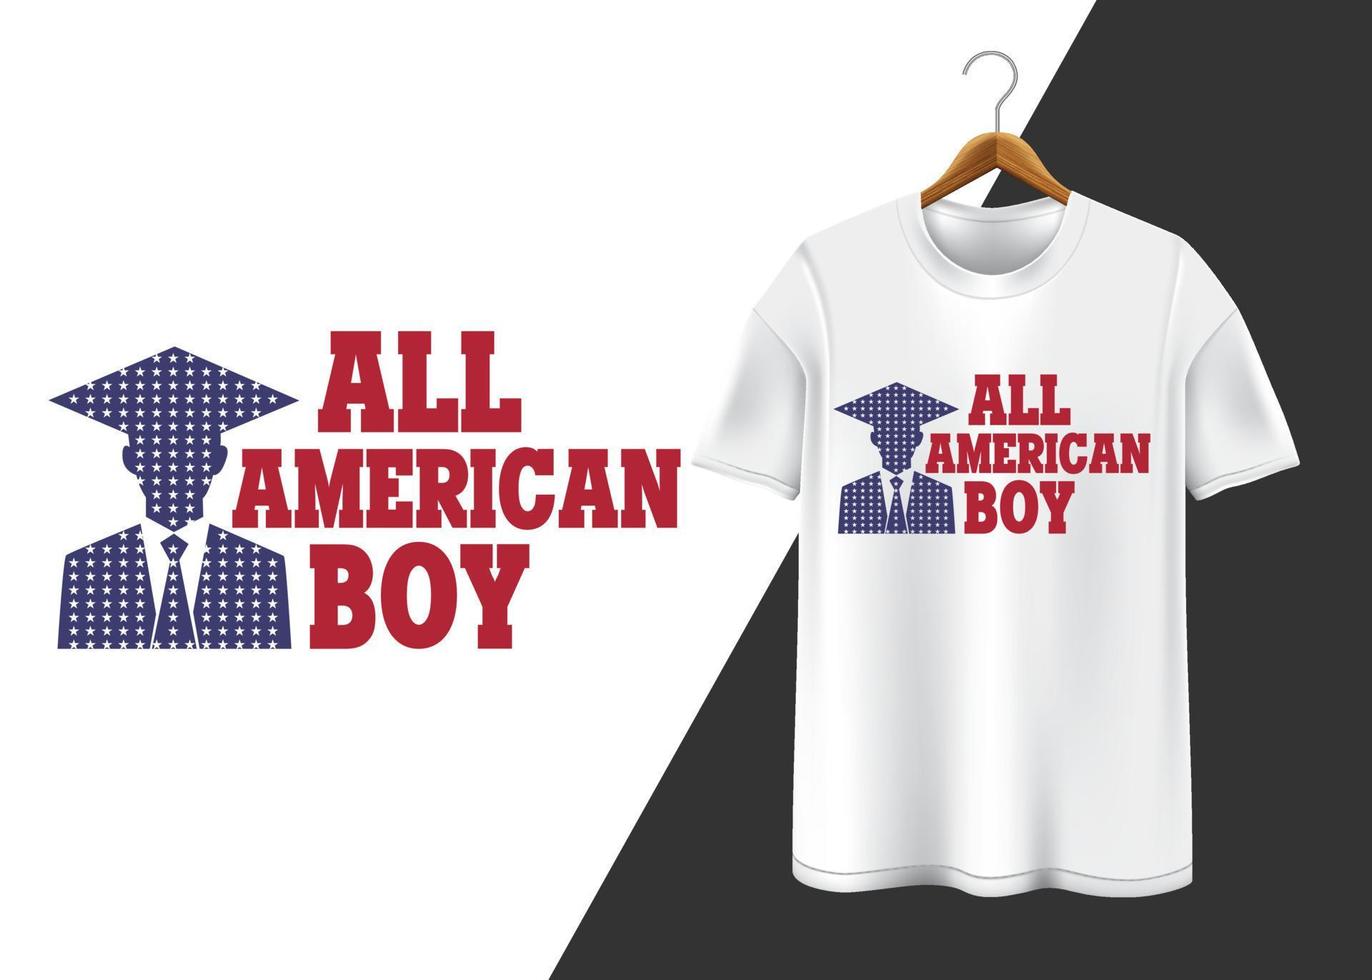 All American boy T-shirt design vector